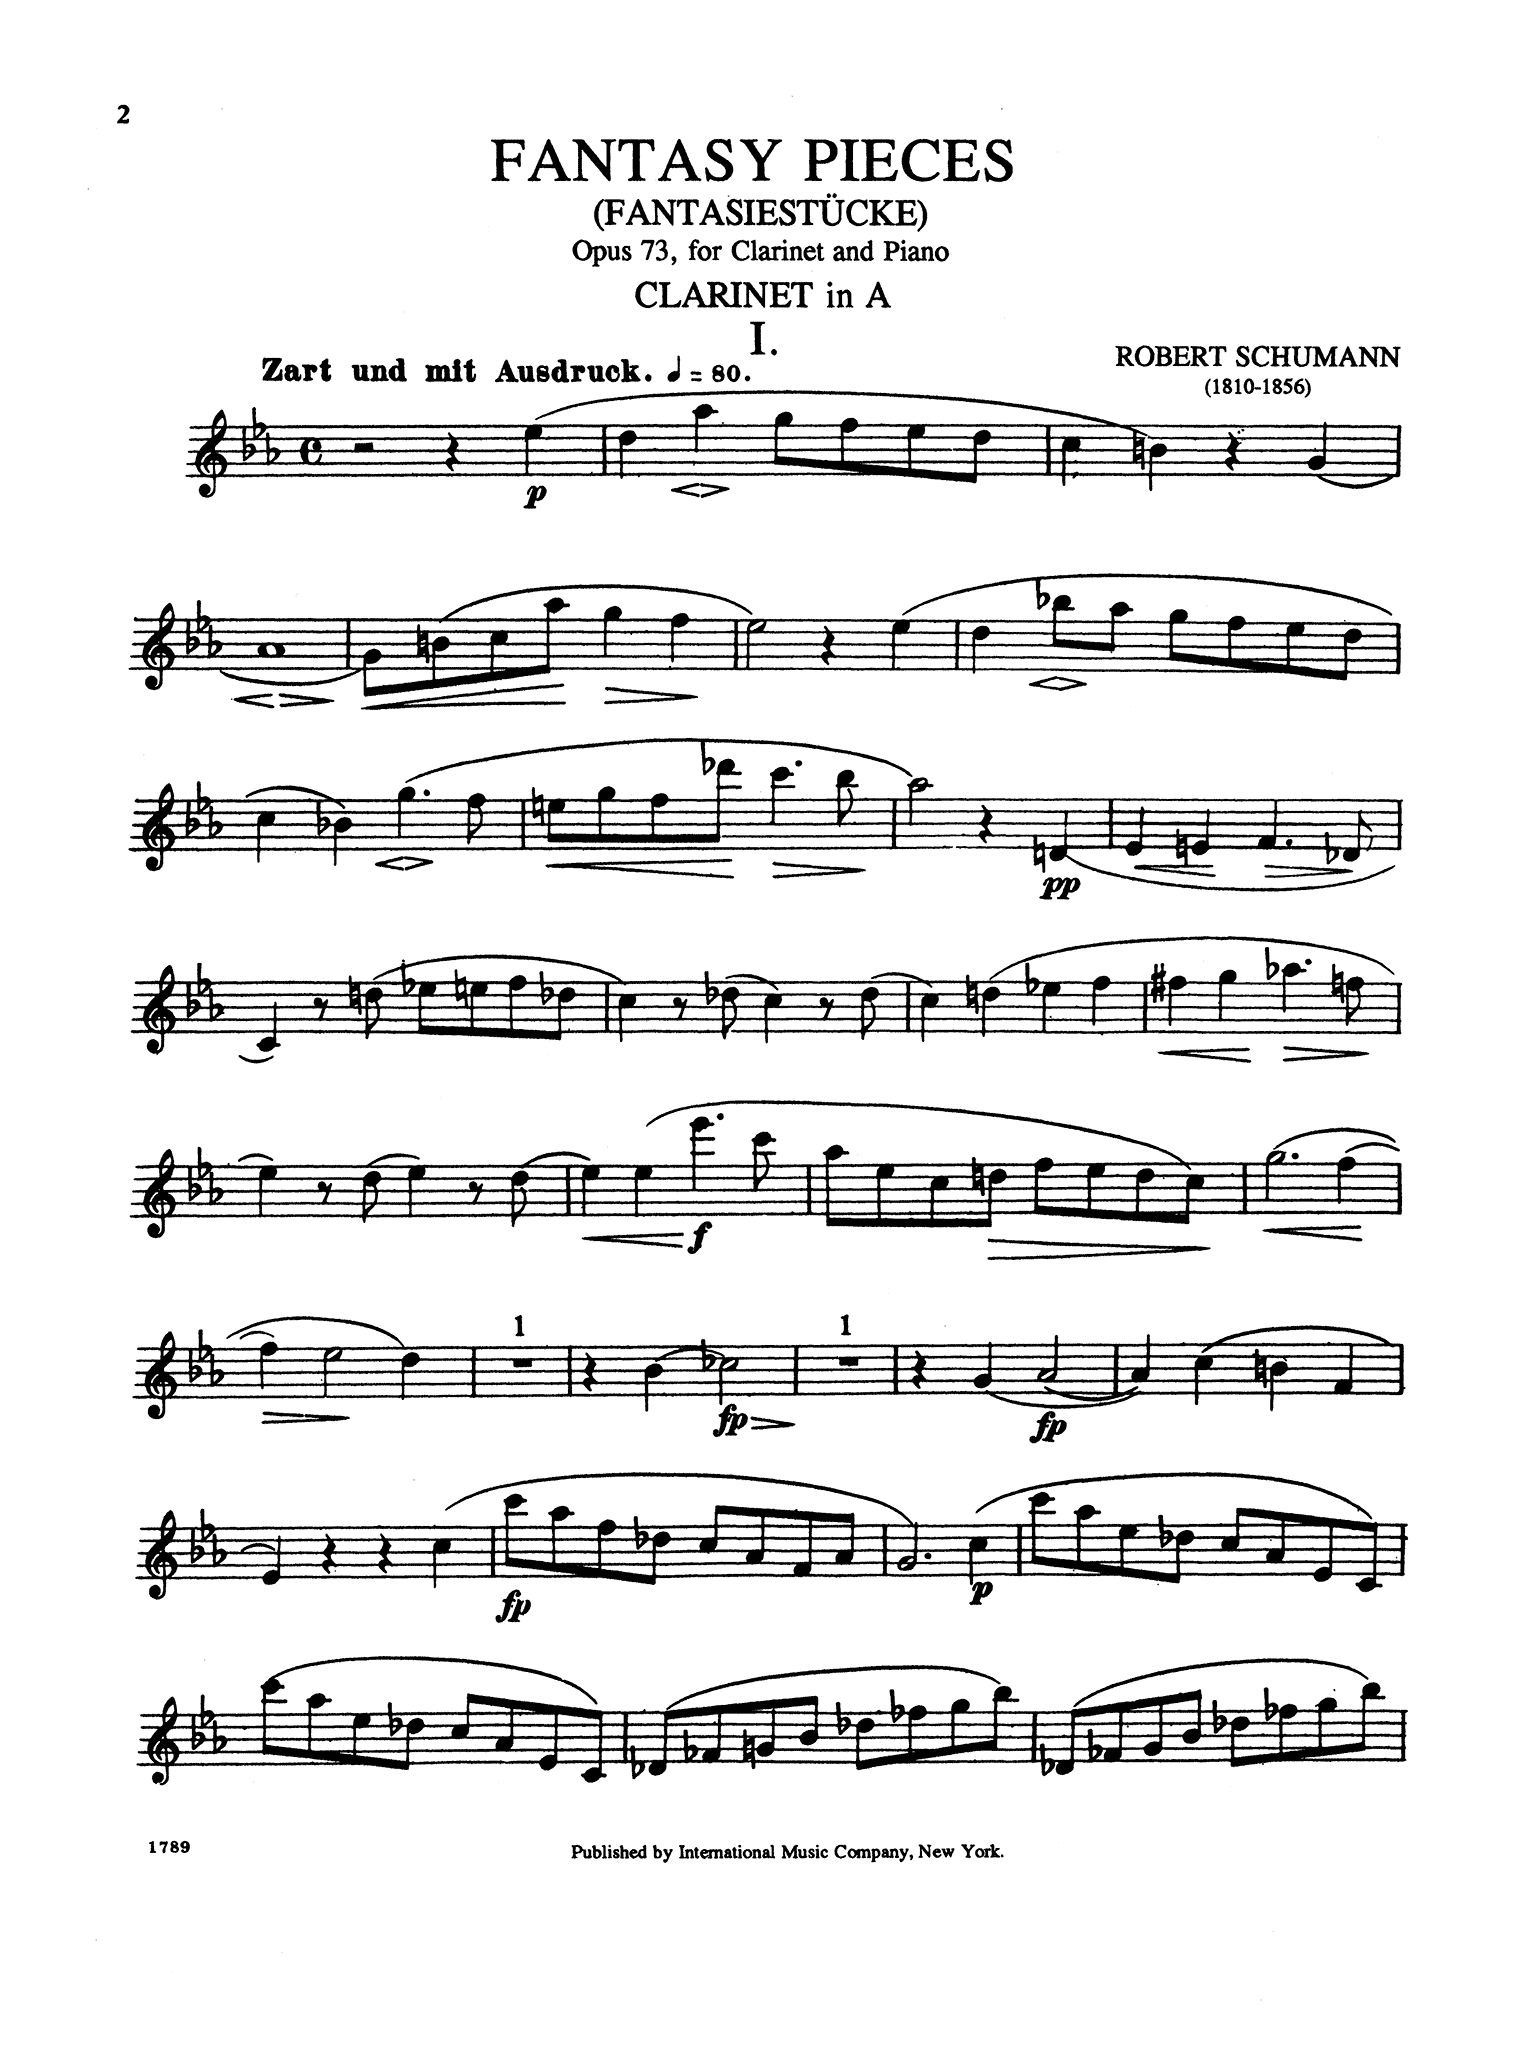 Fantasiestücke, Op. 73 Clarinet part